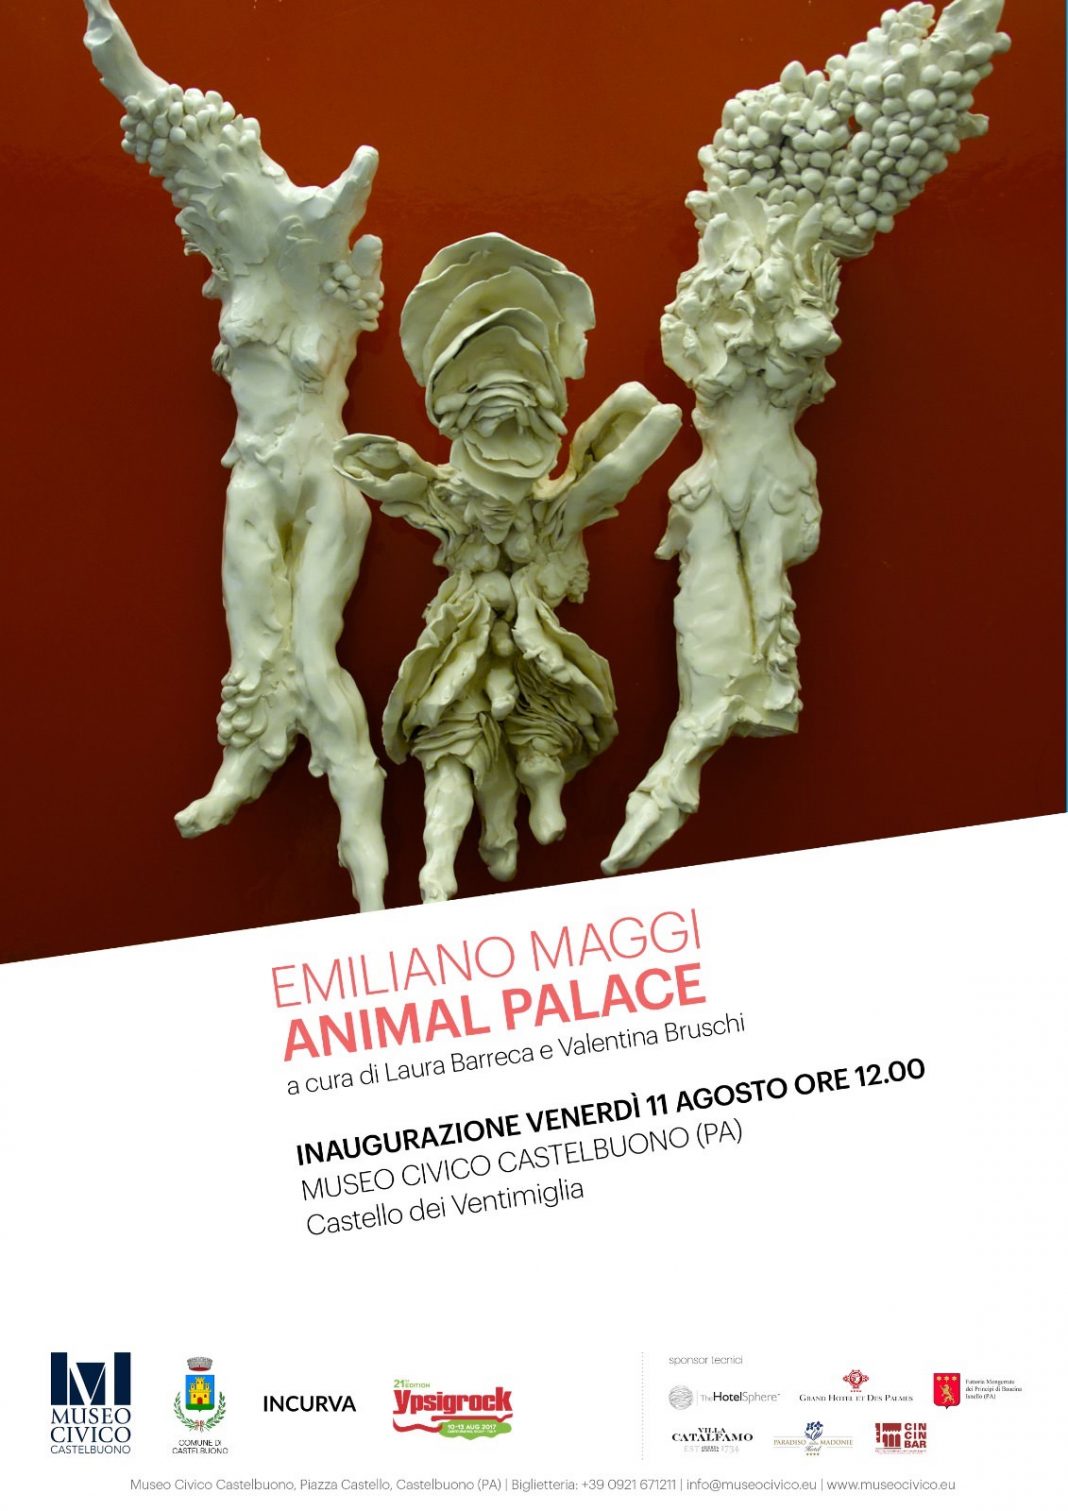 Emiliano Maggi – Animal Palacehttps://www.exibart.com/repository/media/eventi/2017/08/emiliano-maggi-8211-animal-palace-1068x1511.jpg